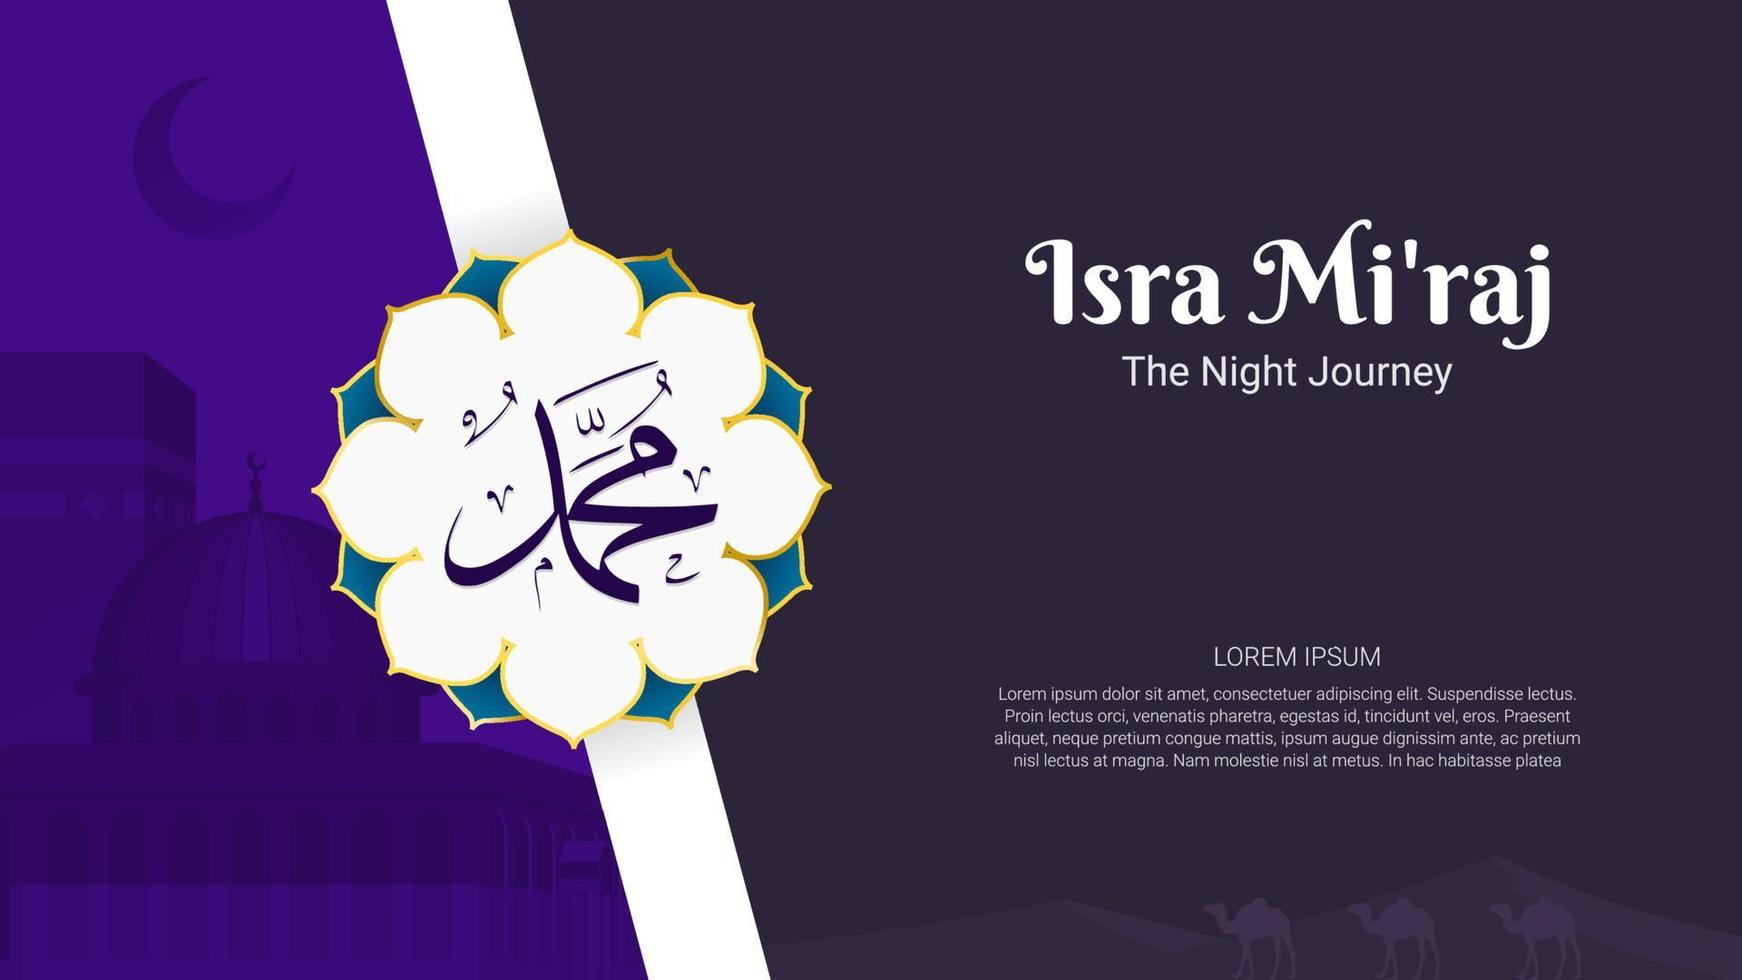 Islamic Background Design. Al-Isra wal Mi'raj means The night journey of Prophet Muhammad. Banner, Poster, Greeting Card. Vector Illustration.